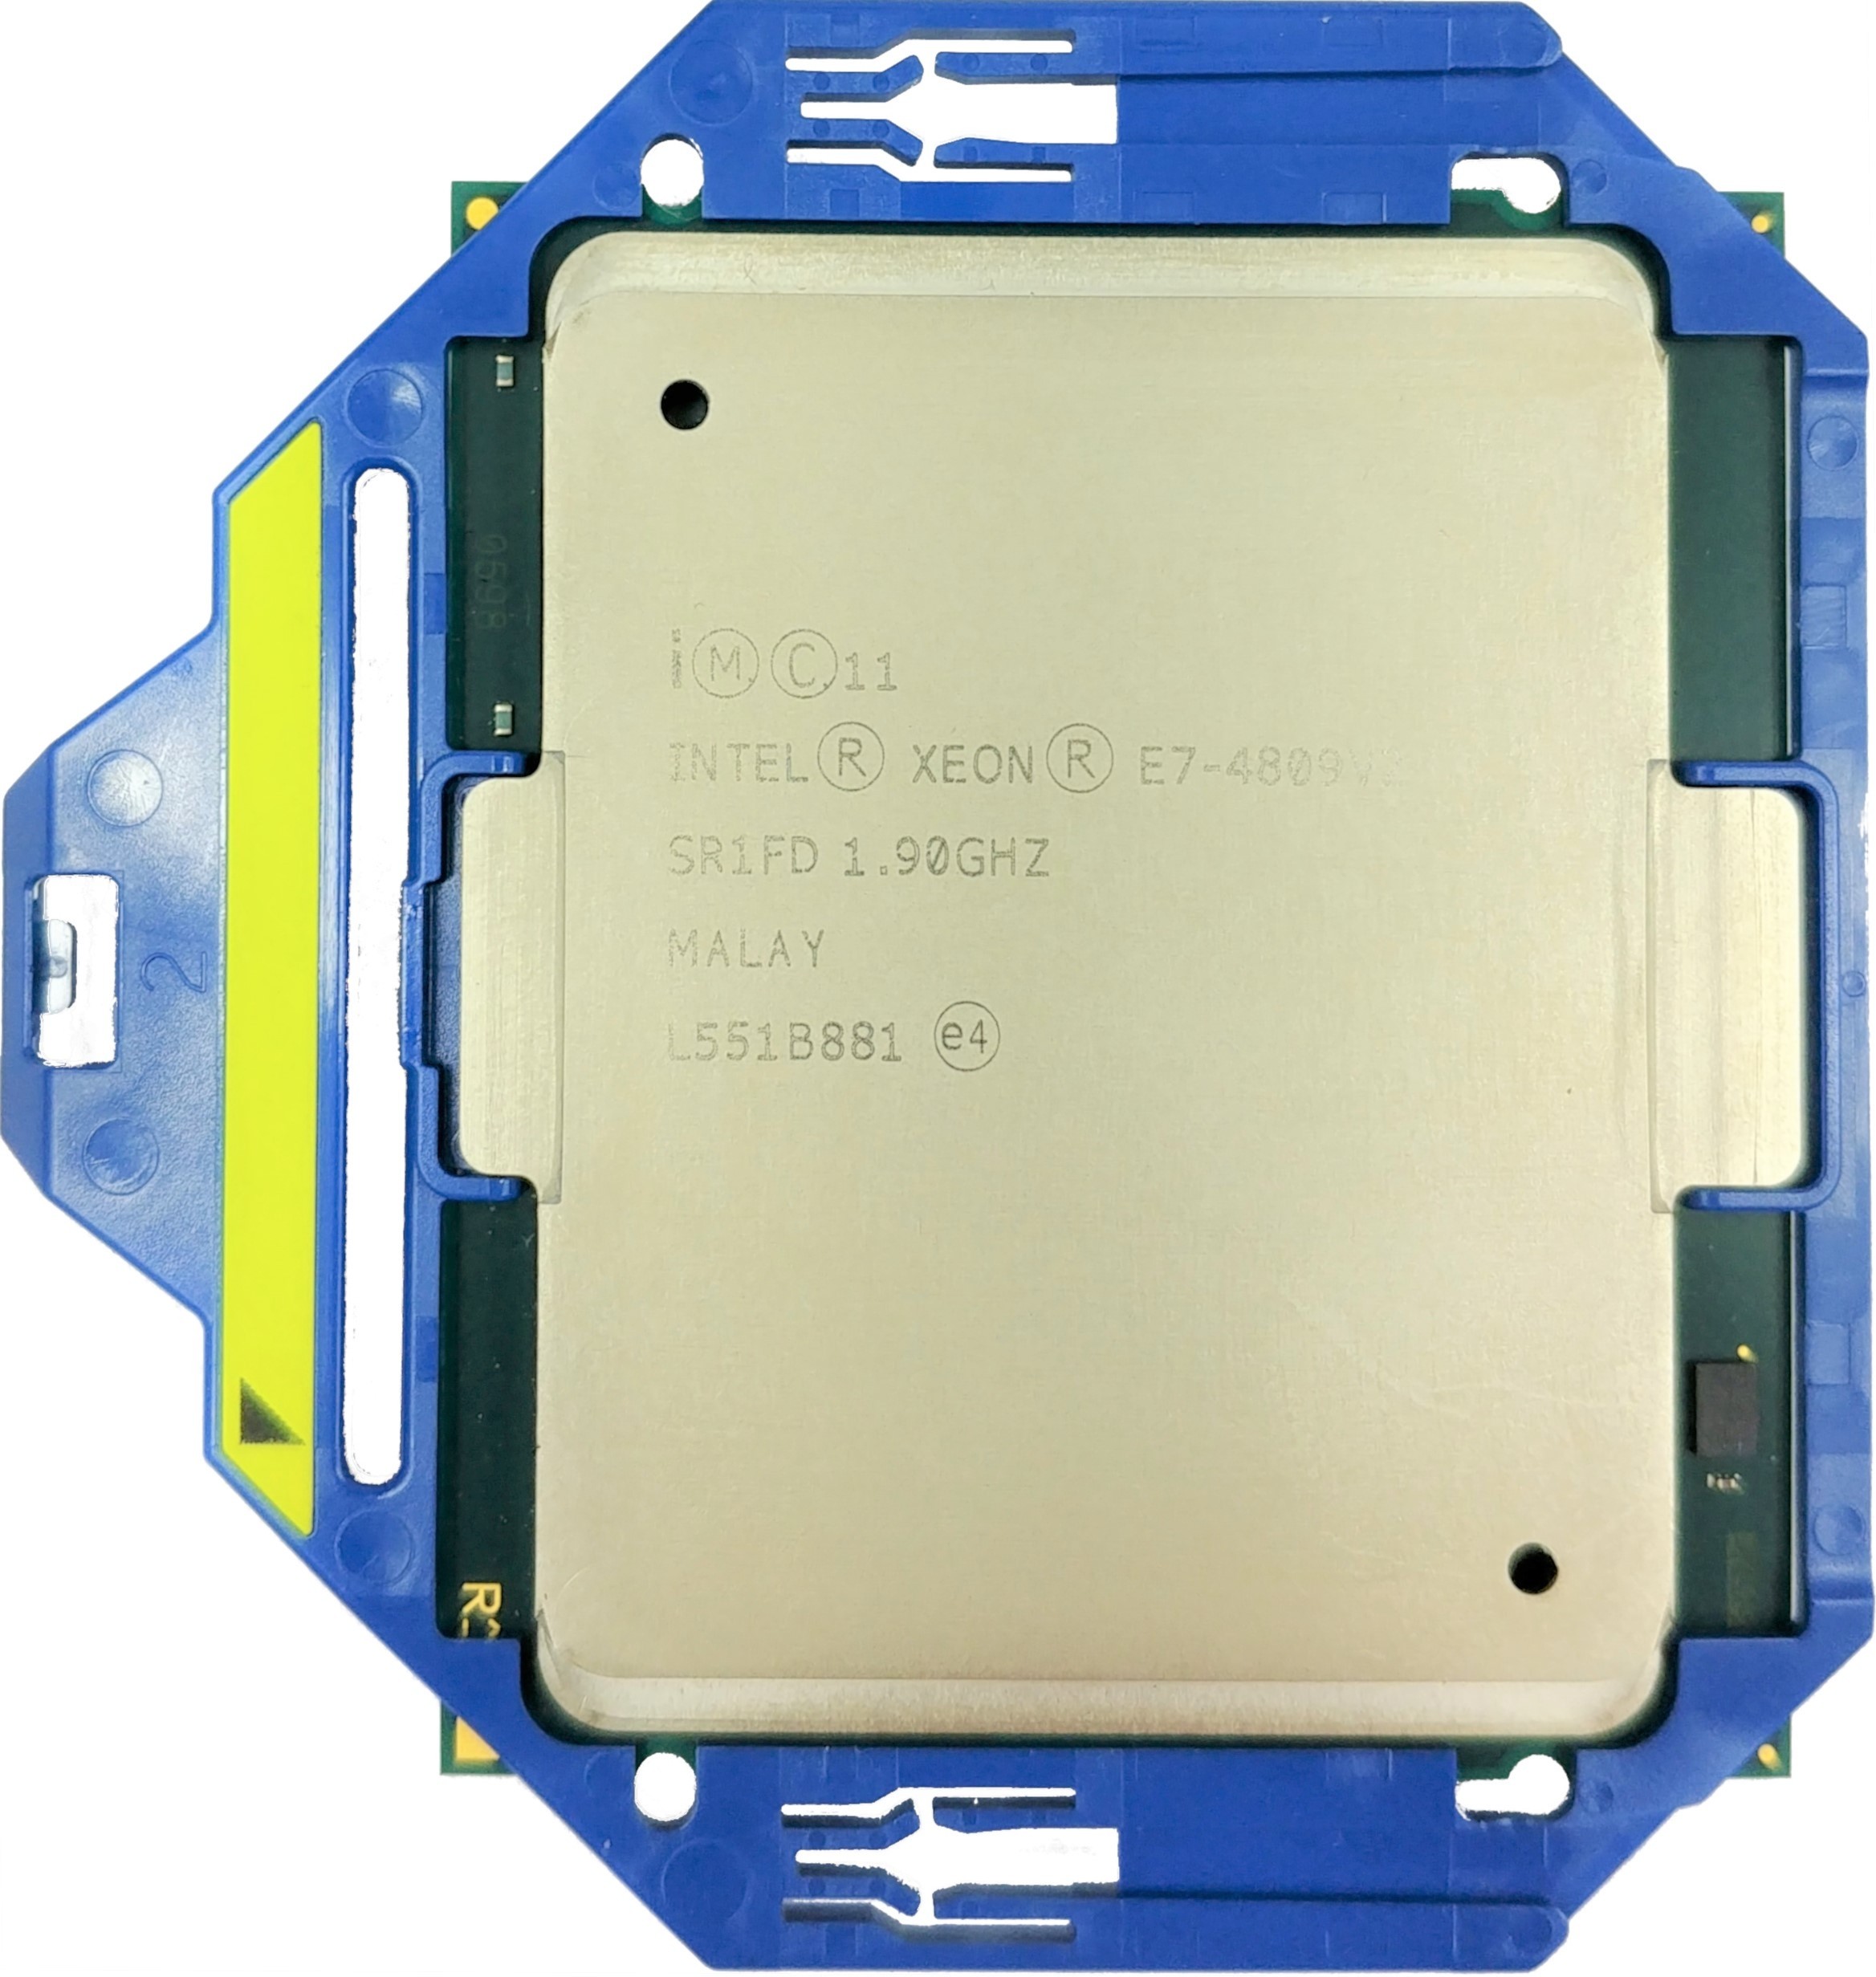 Intel Xeon E7-4809 V2 (SR1FD) 6-Core 1.90GHz LGA2011-1 12MB 105W CPU Processor